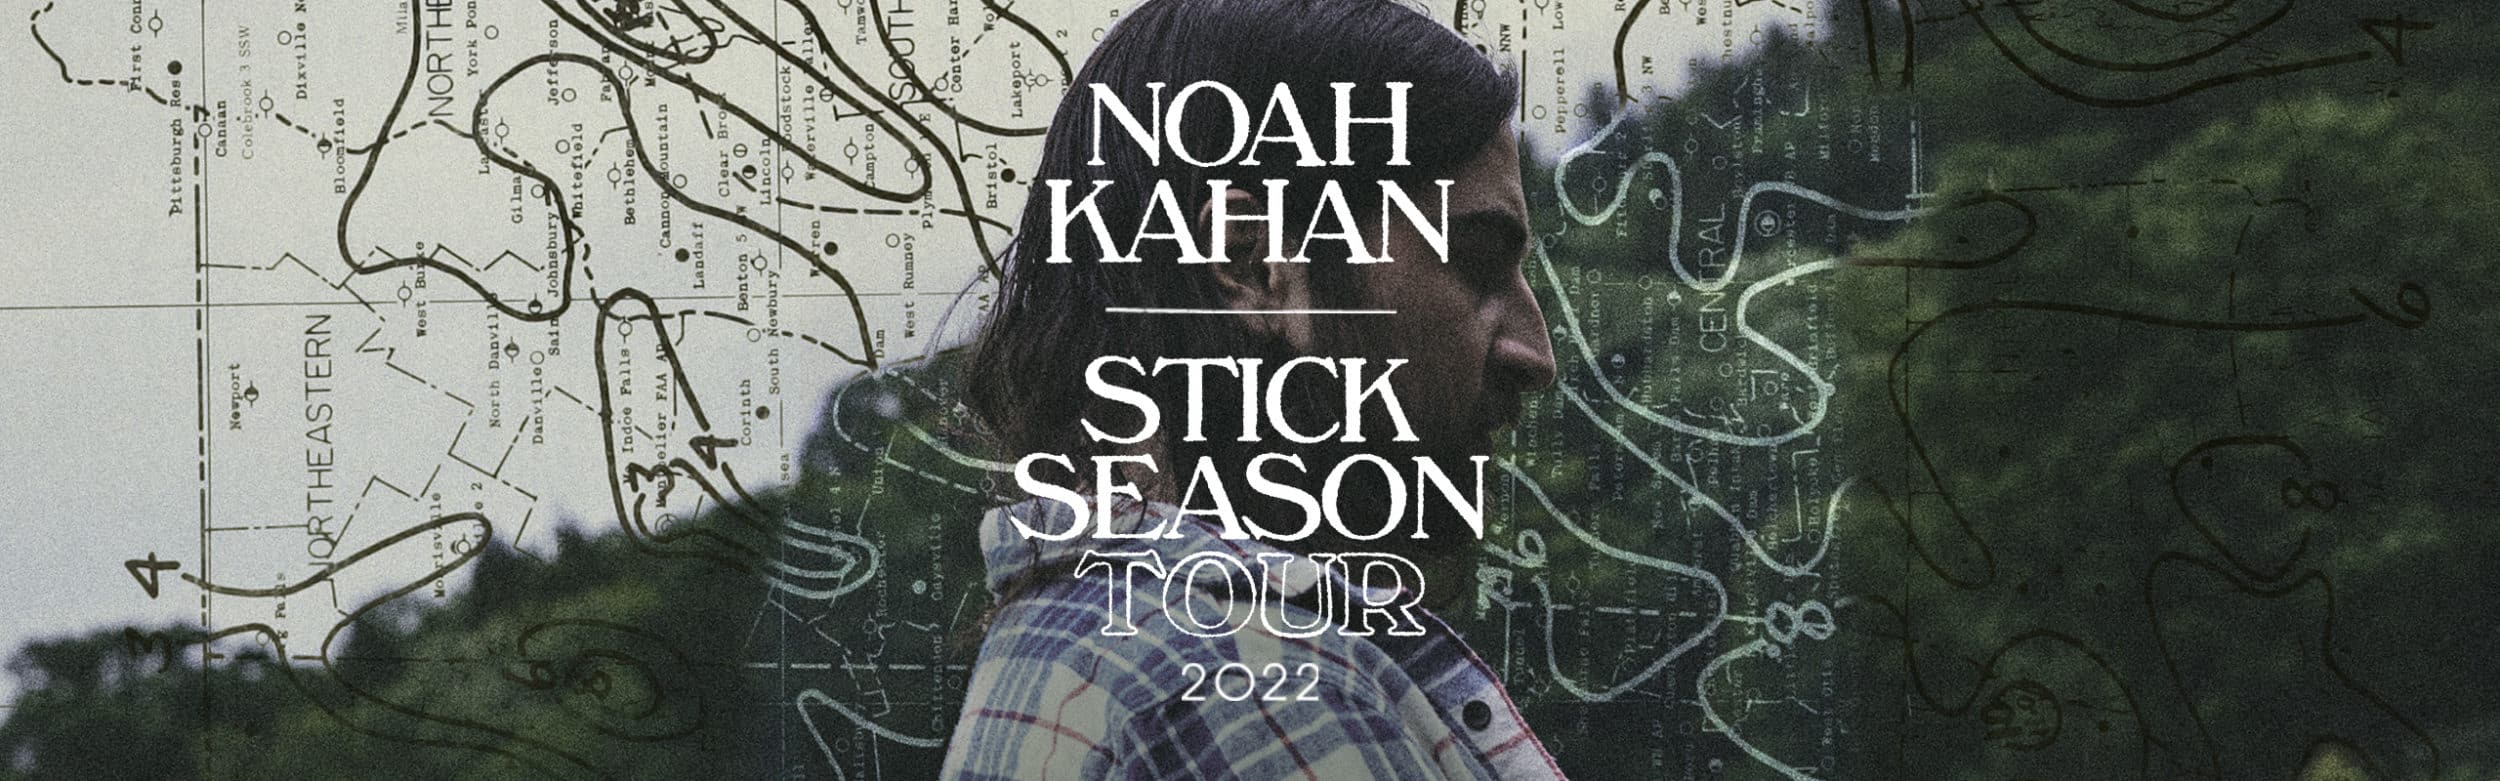 Noah Kahan: The Stick Season Tour